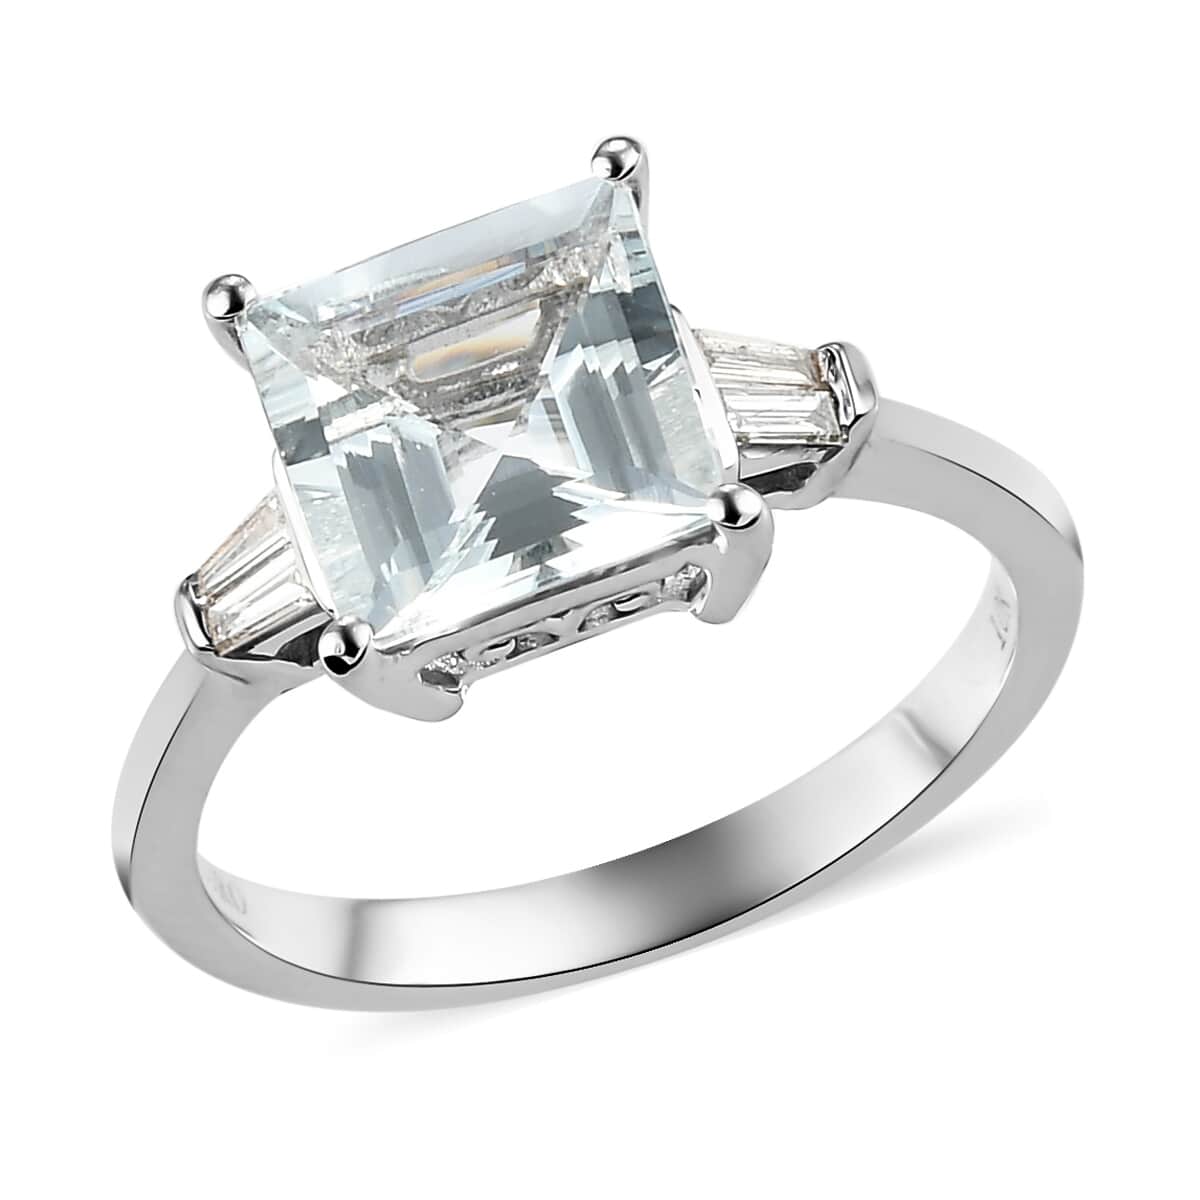 Luxoro 10K White Gold Premium Espirito Santo Aquamarine and Diamond Ring (Size 9.0) 2.65 Grams 2.25 ctw image number 0